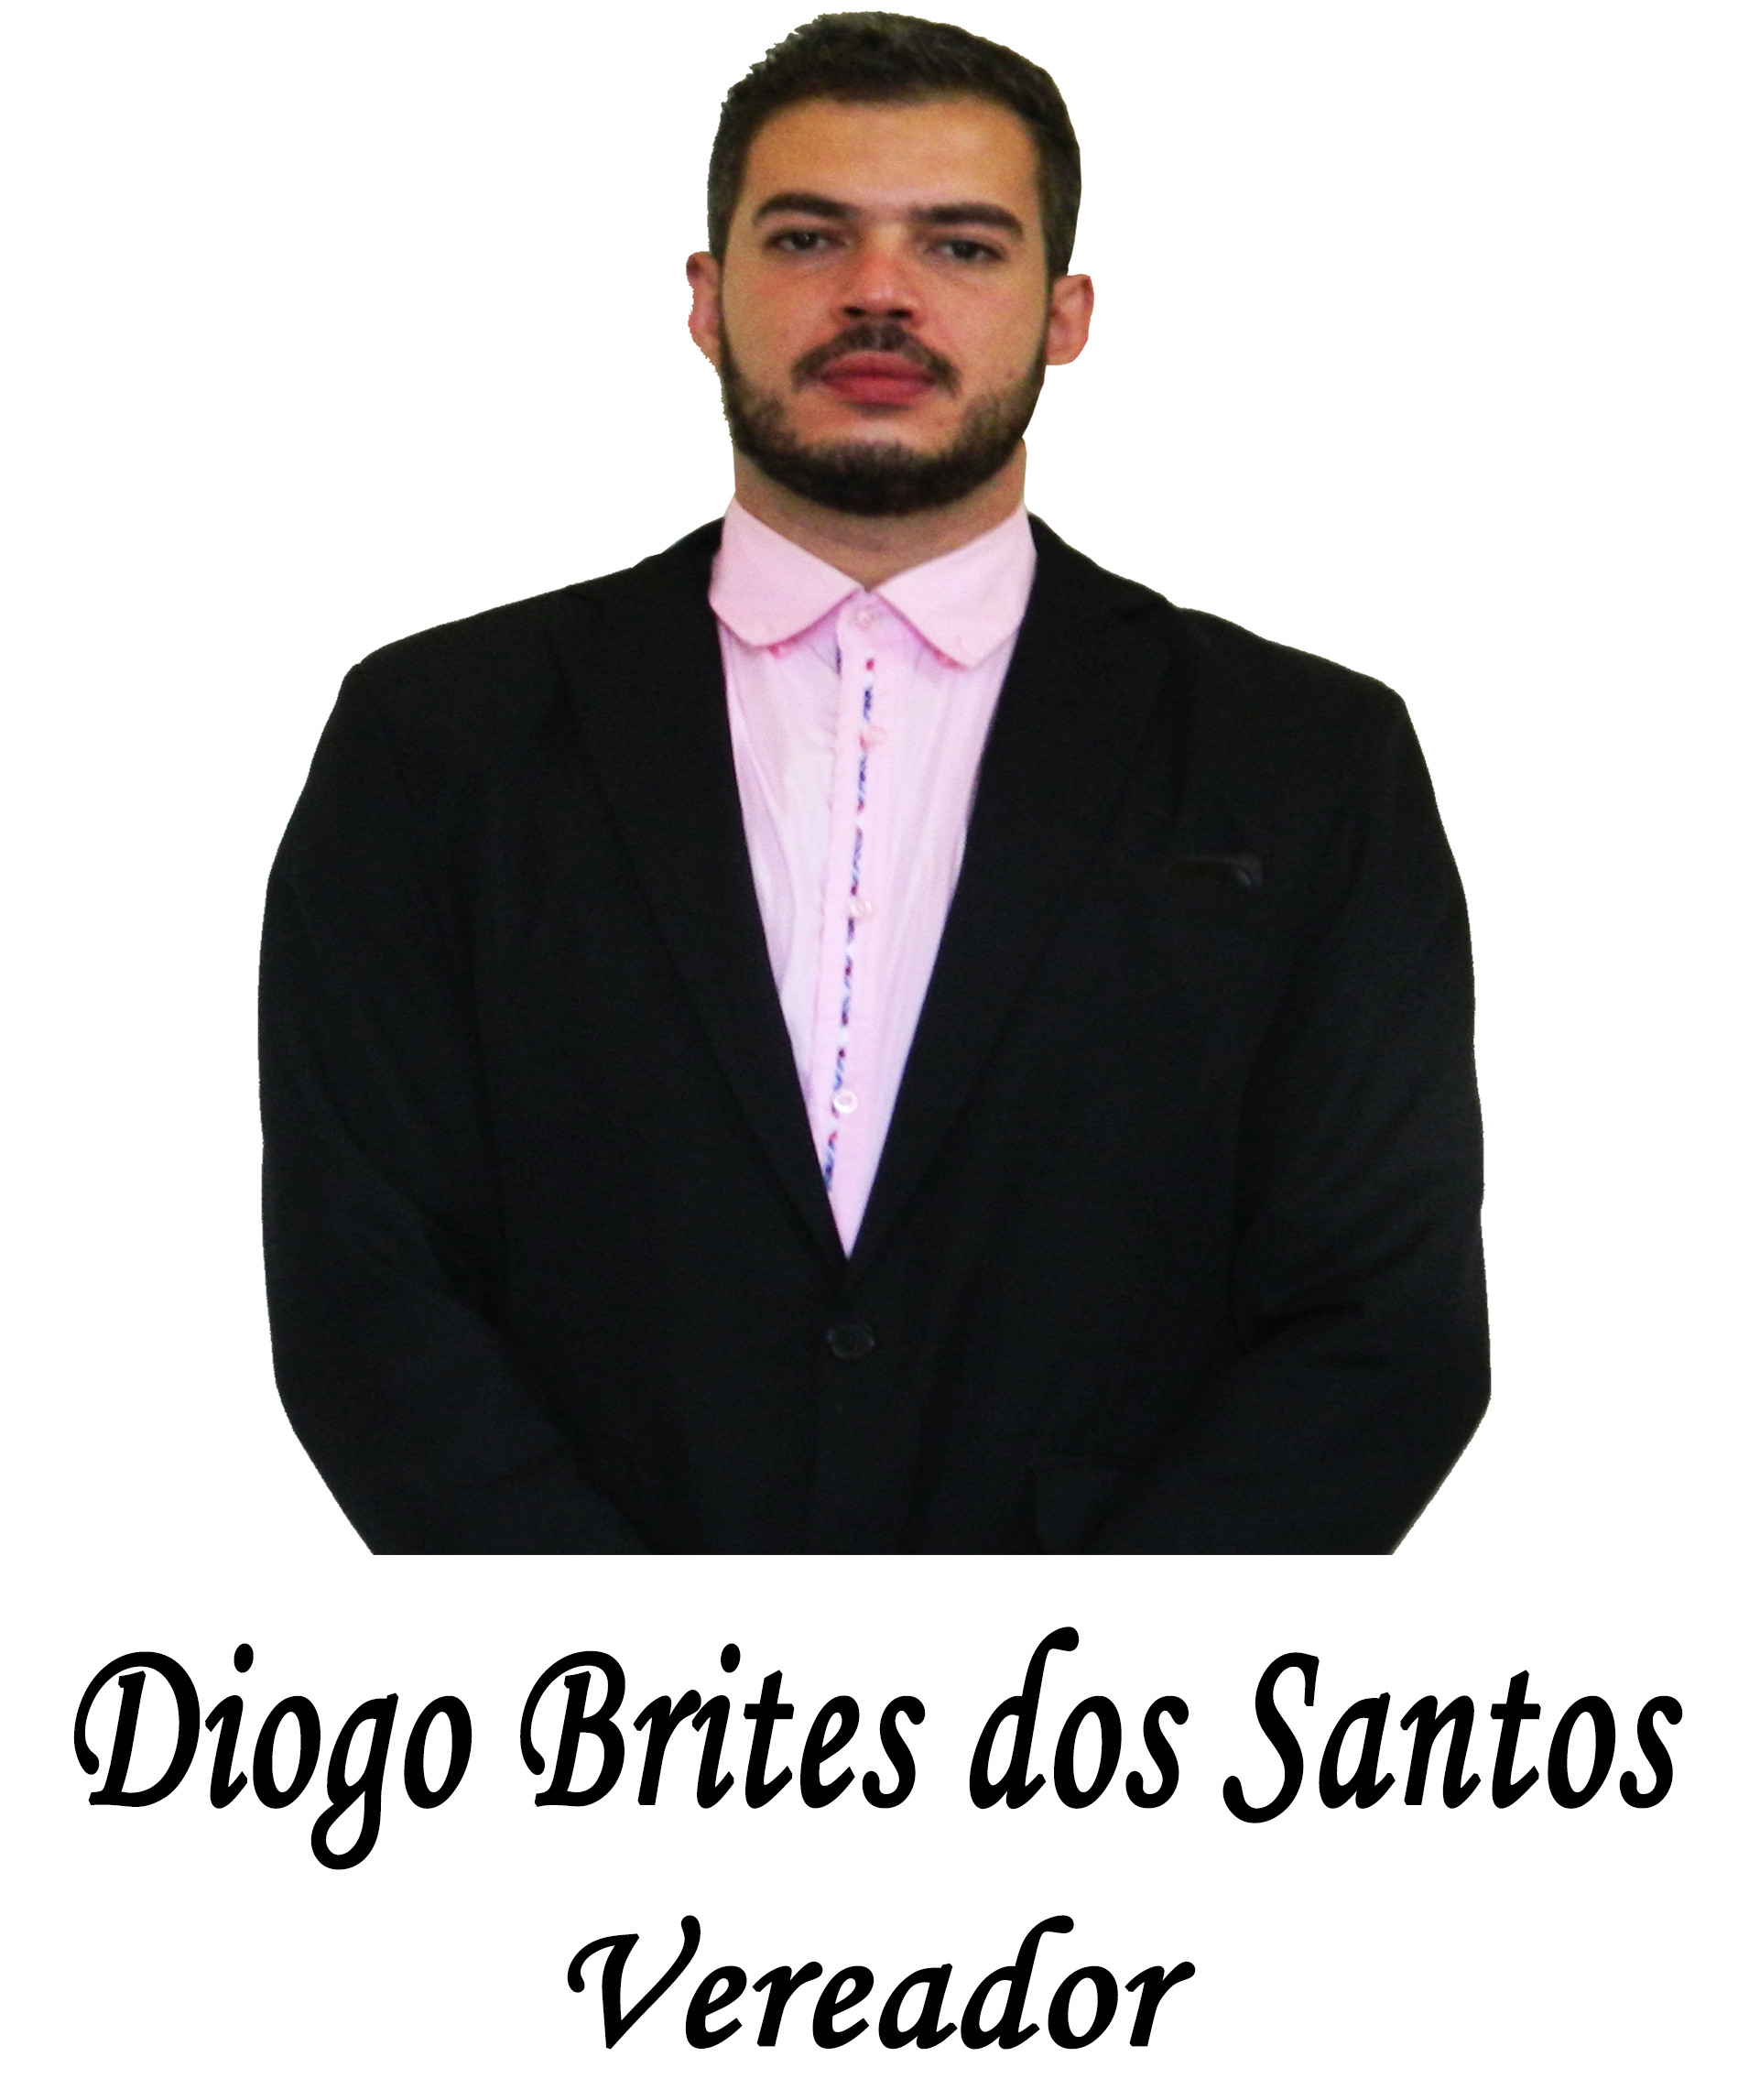 Diogo Brites